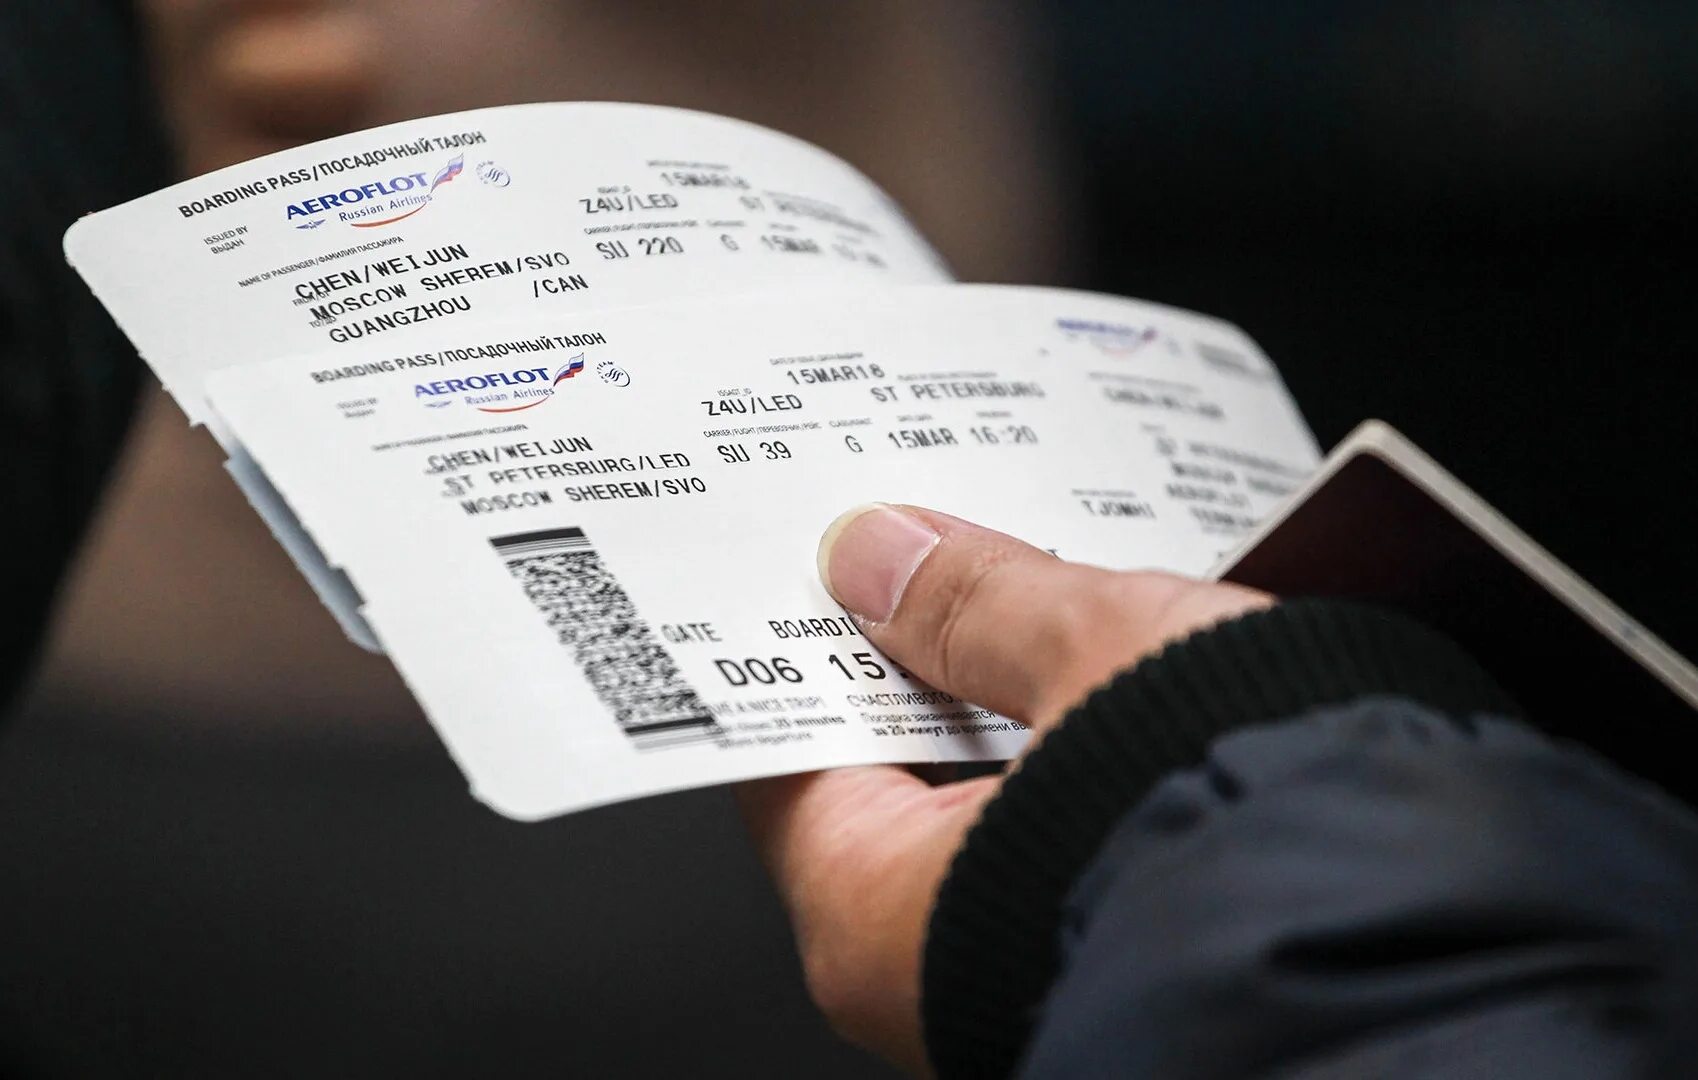 Авиа билет россия. Авиабилеты фото. Билеты на самолет. Билет на самолет картинка. Фото авиабилетов в руках.